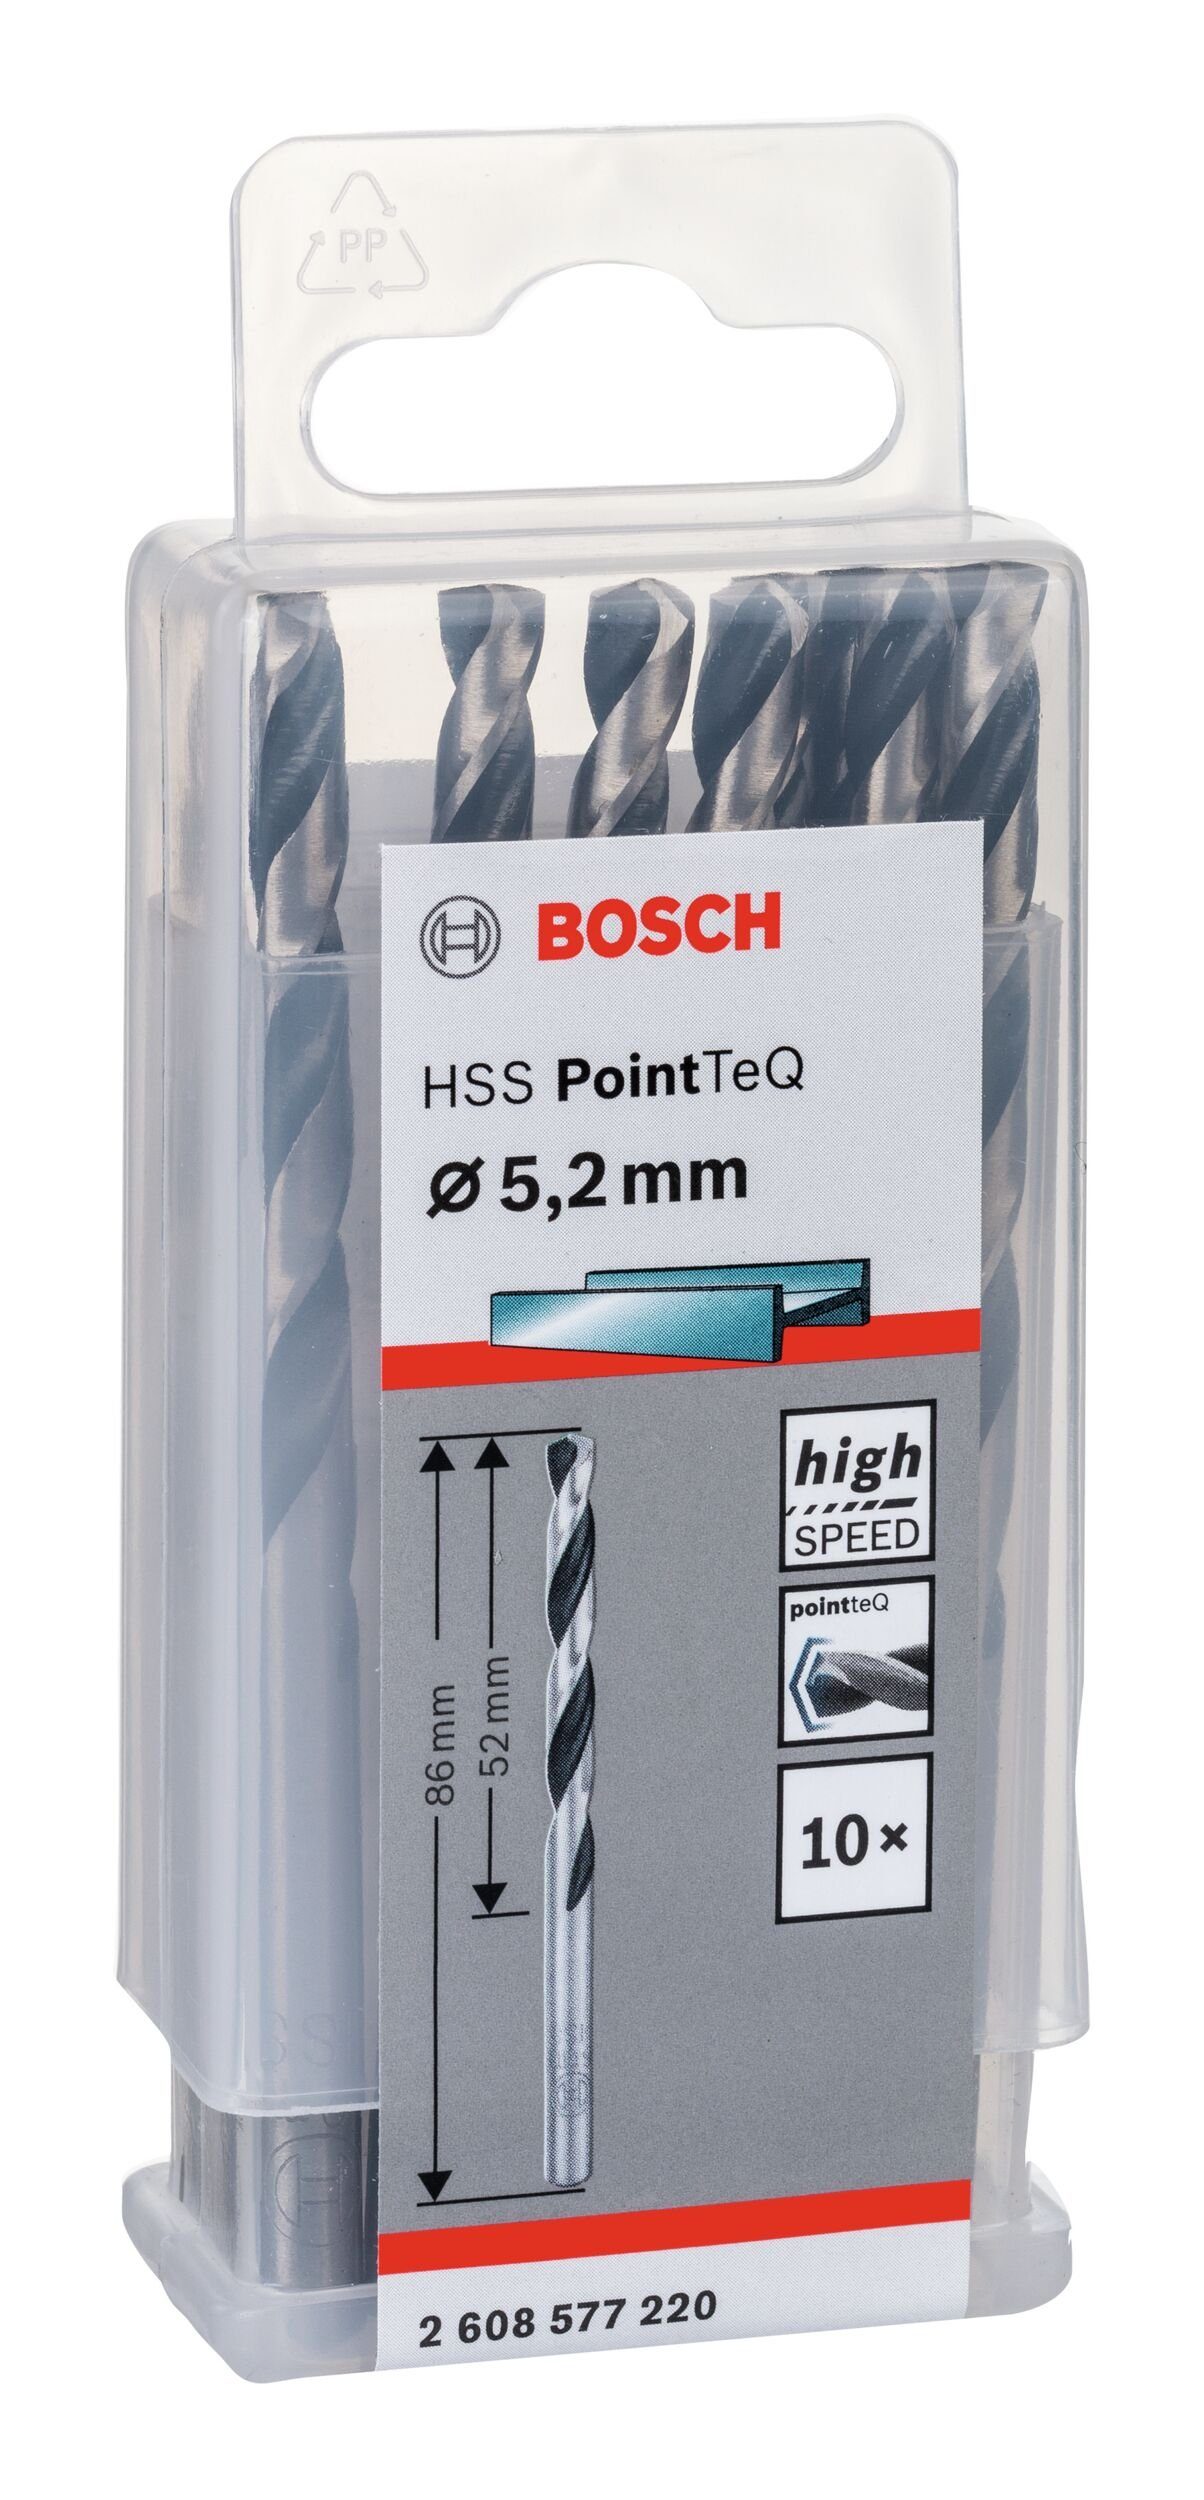 mm (10 PointTeQ 10er-Pack - 338) Metallspiralbohrer Metallbohrer, 5,2 (DIN BOSCH - Stück), HSS